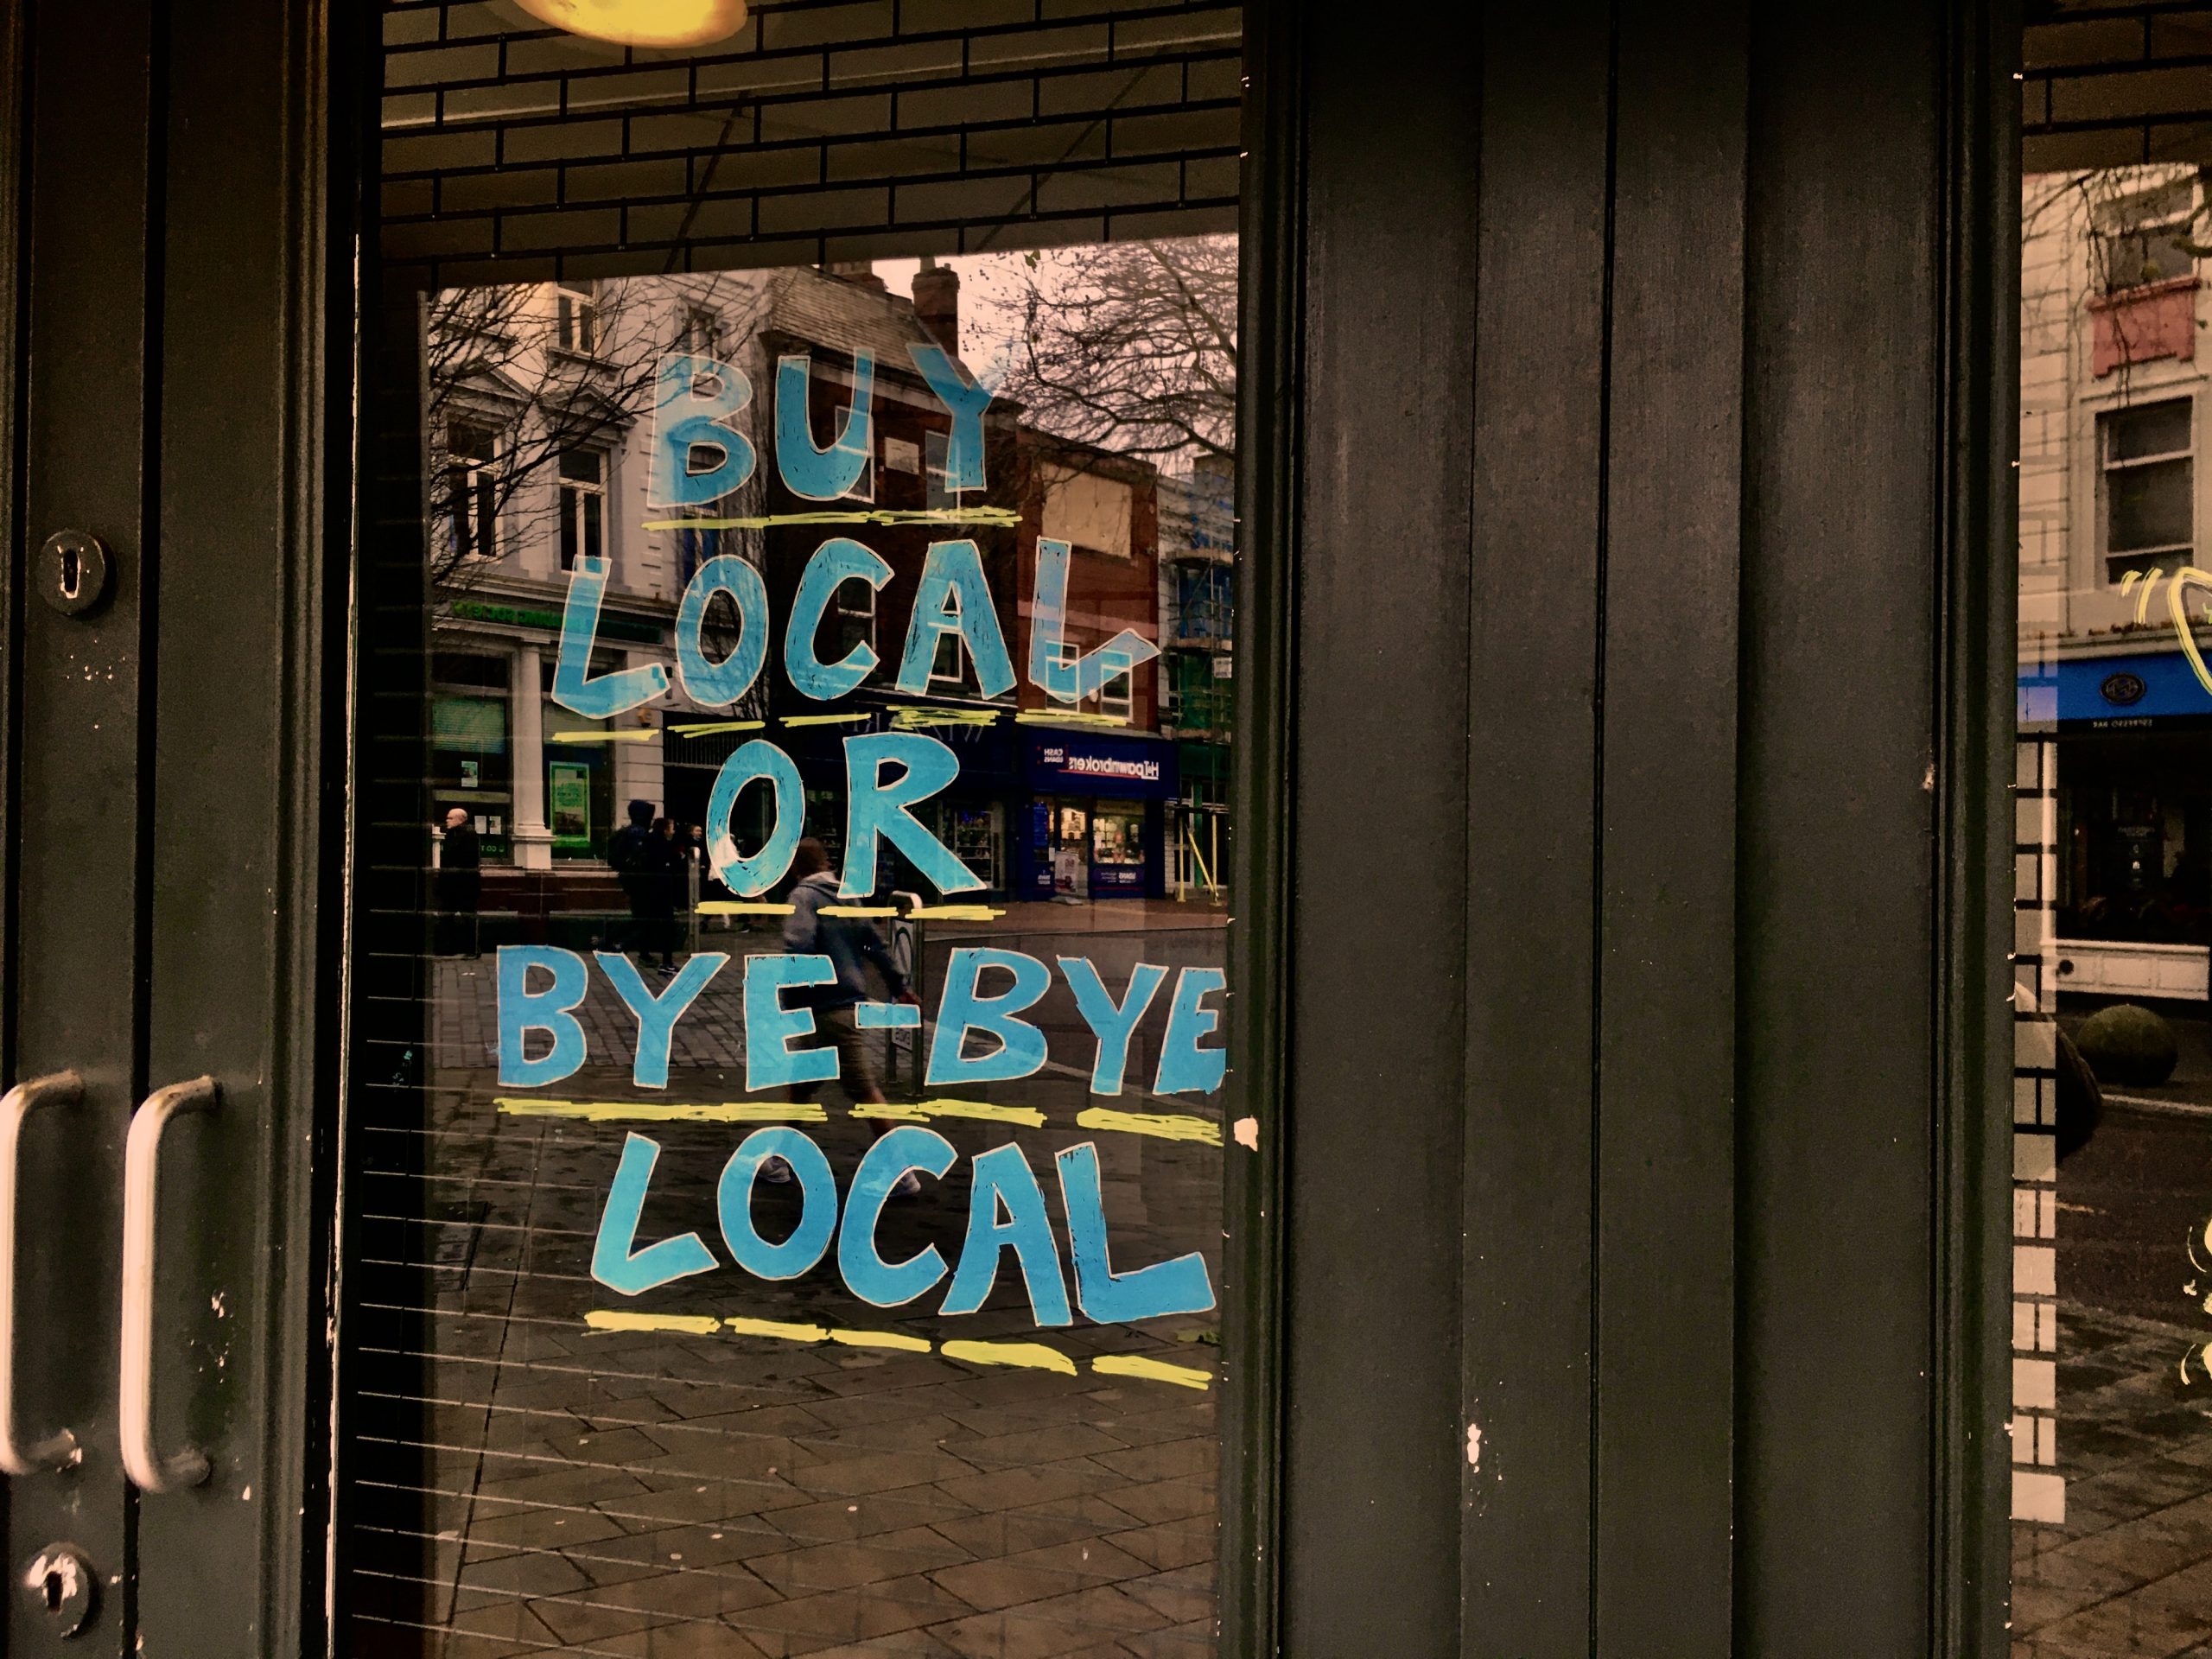 Buy Local or Bye-Bye Local written on shop doors